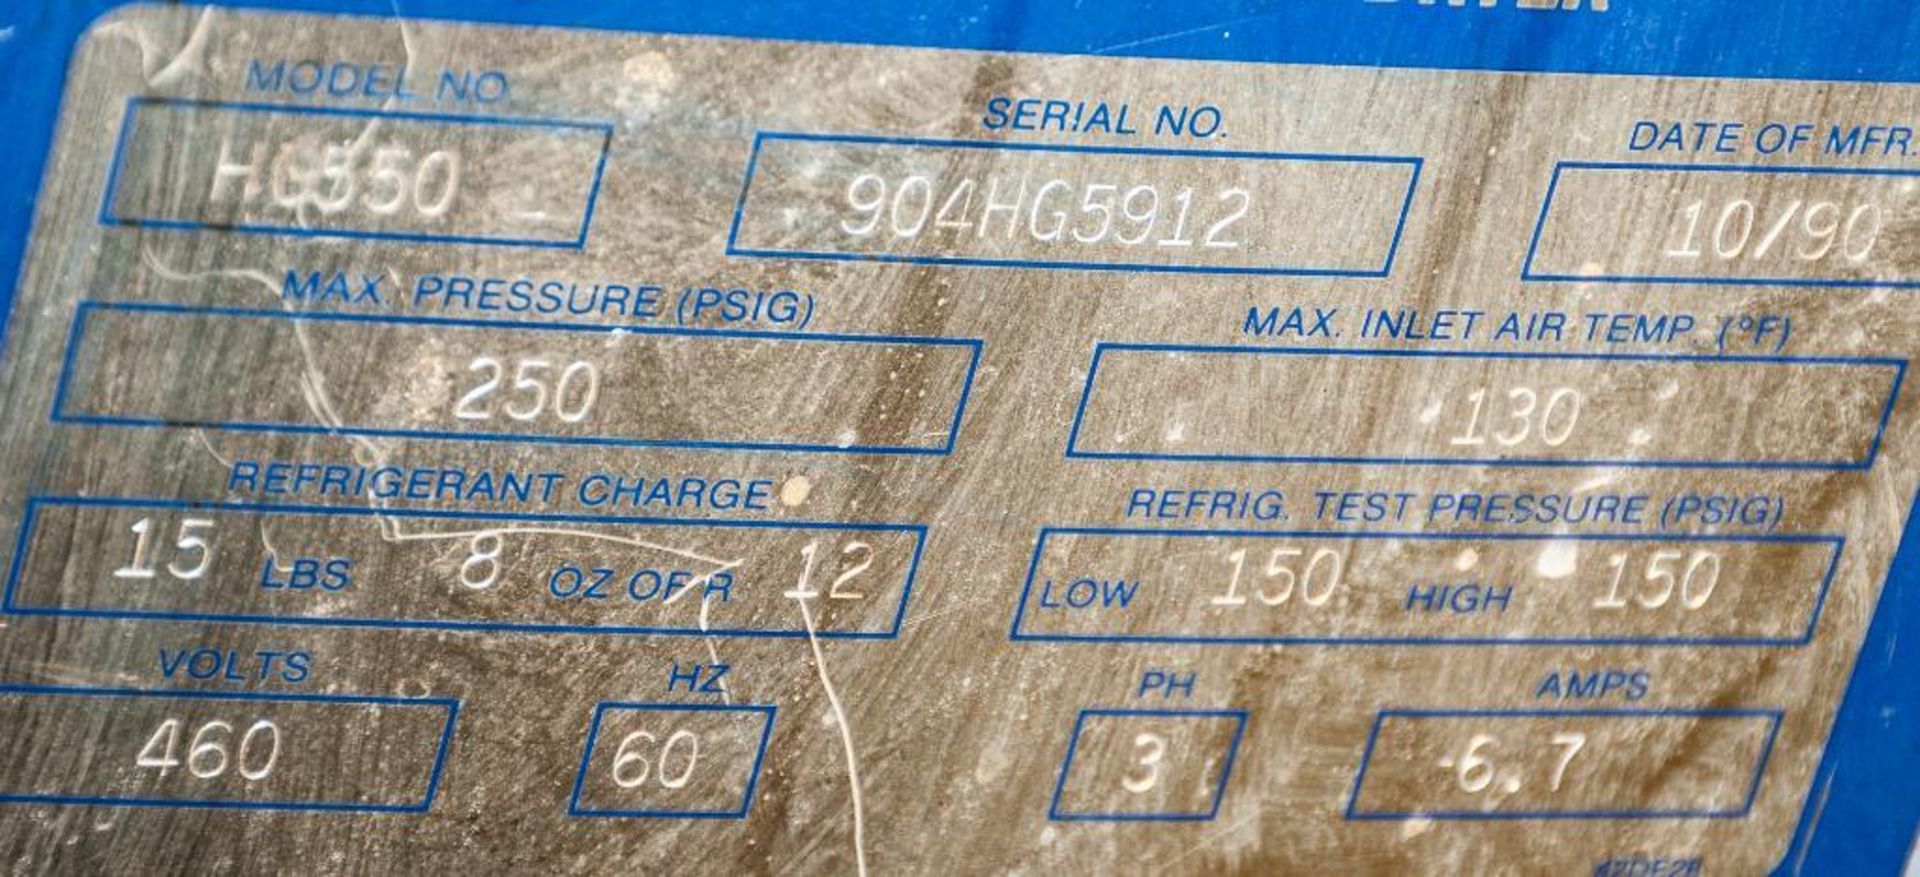 Ingersoll Rand Hydroguard Air Dryer Mdl. HG550, s/n 9044HG5912, 460v 3ph, Needs Fan Motor - Image 4 of 4